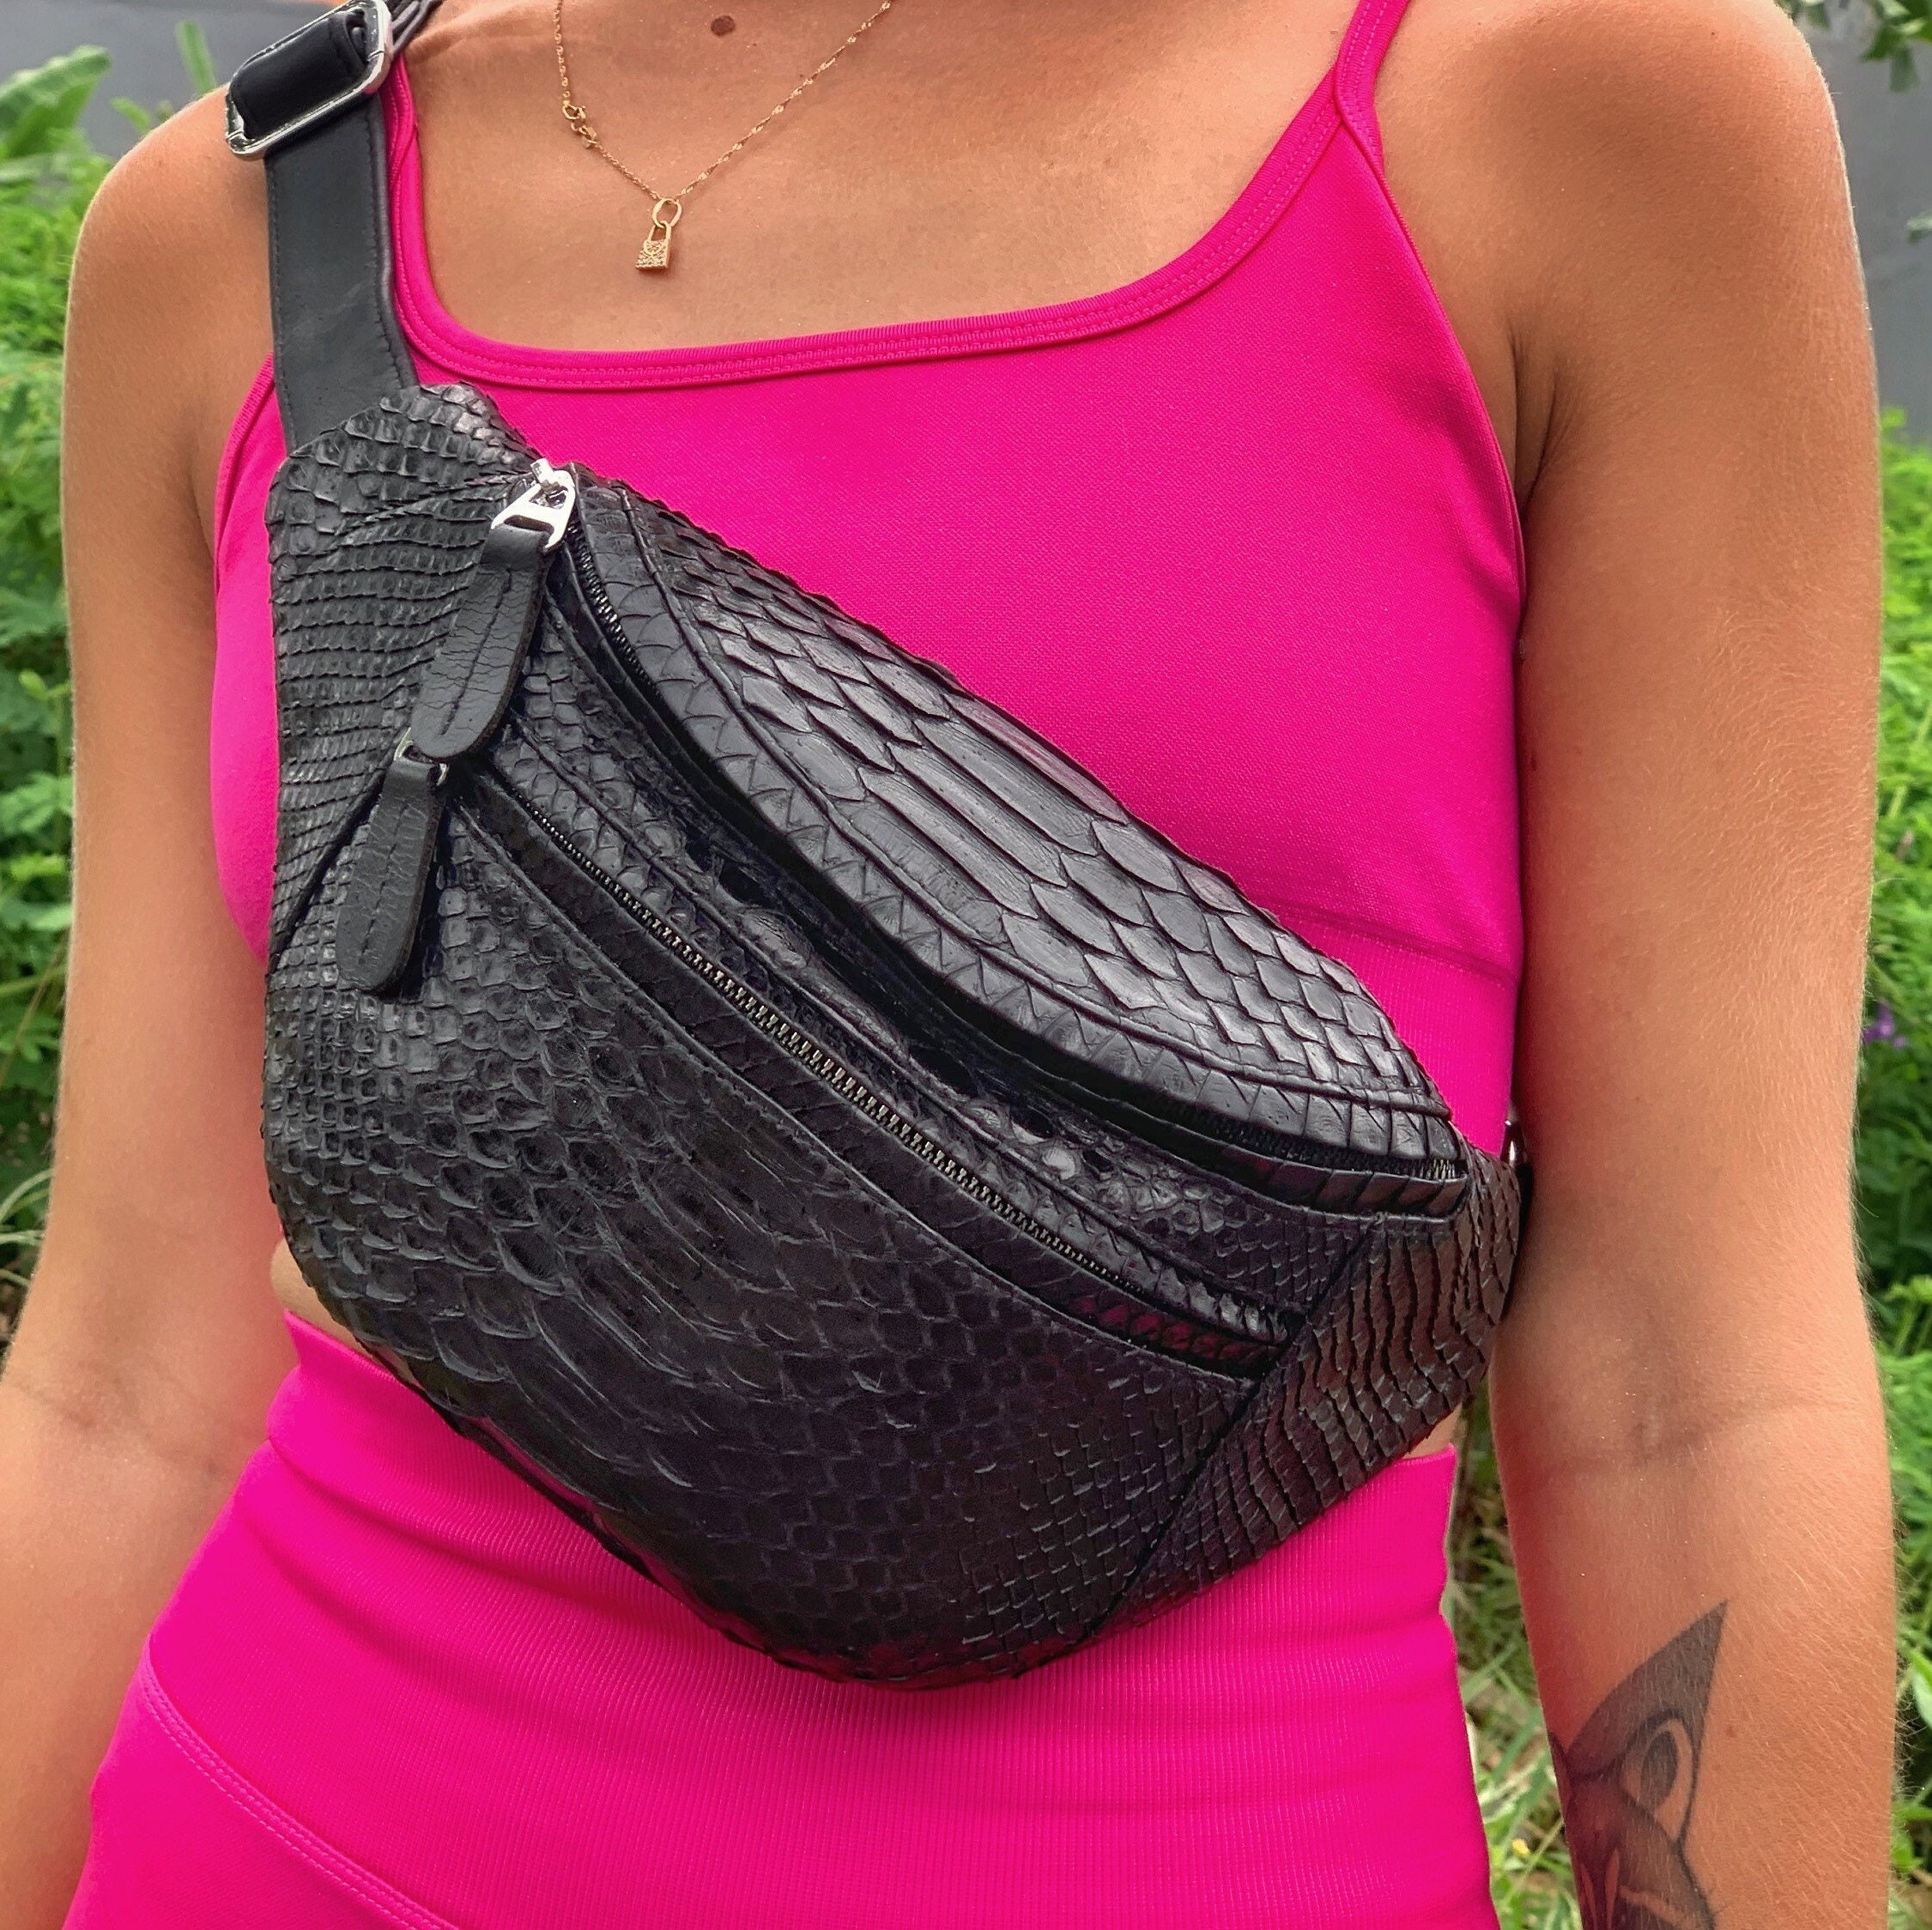 Ho-Lala Thick Chain Women's Fanny Pack Plaid Leather Waist Bag Shoulder Crossbody Chest Bags Luxury Designer Handbags Female Belt Bag (Black)